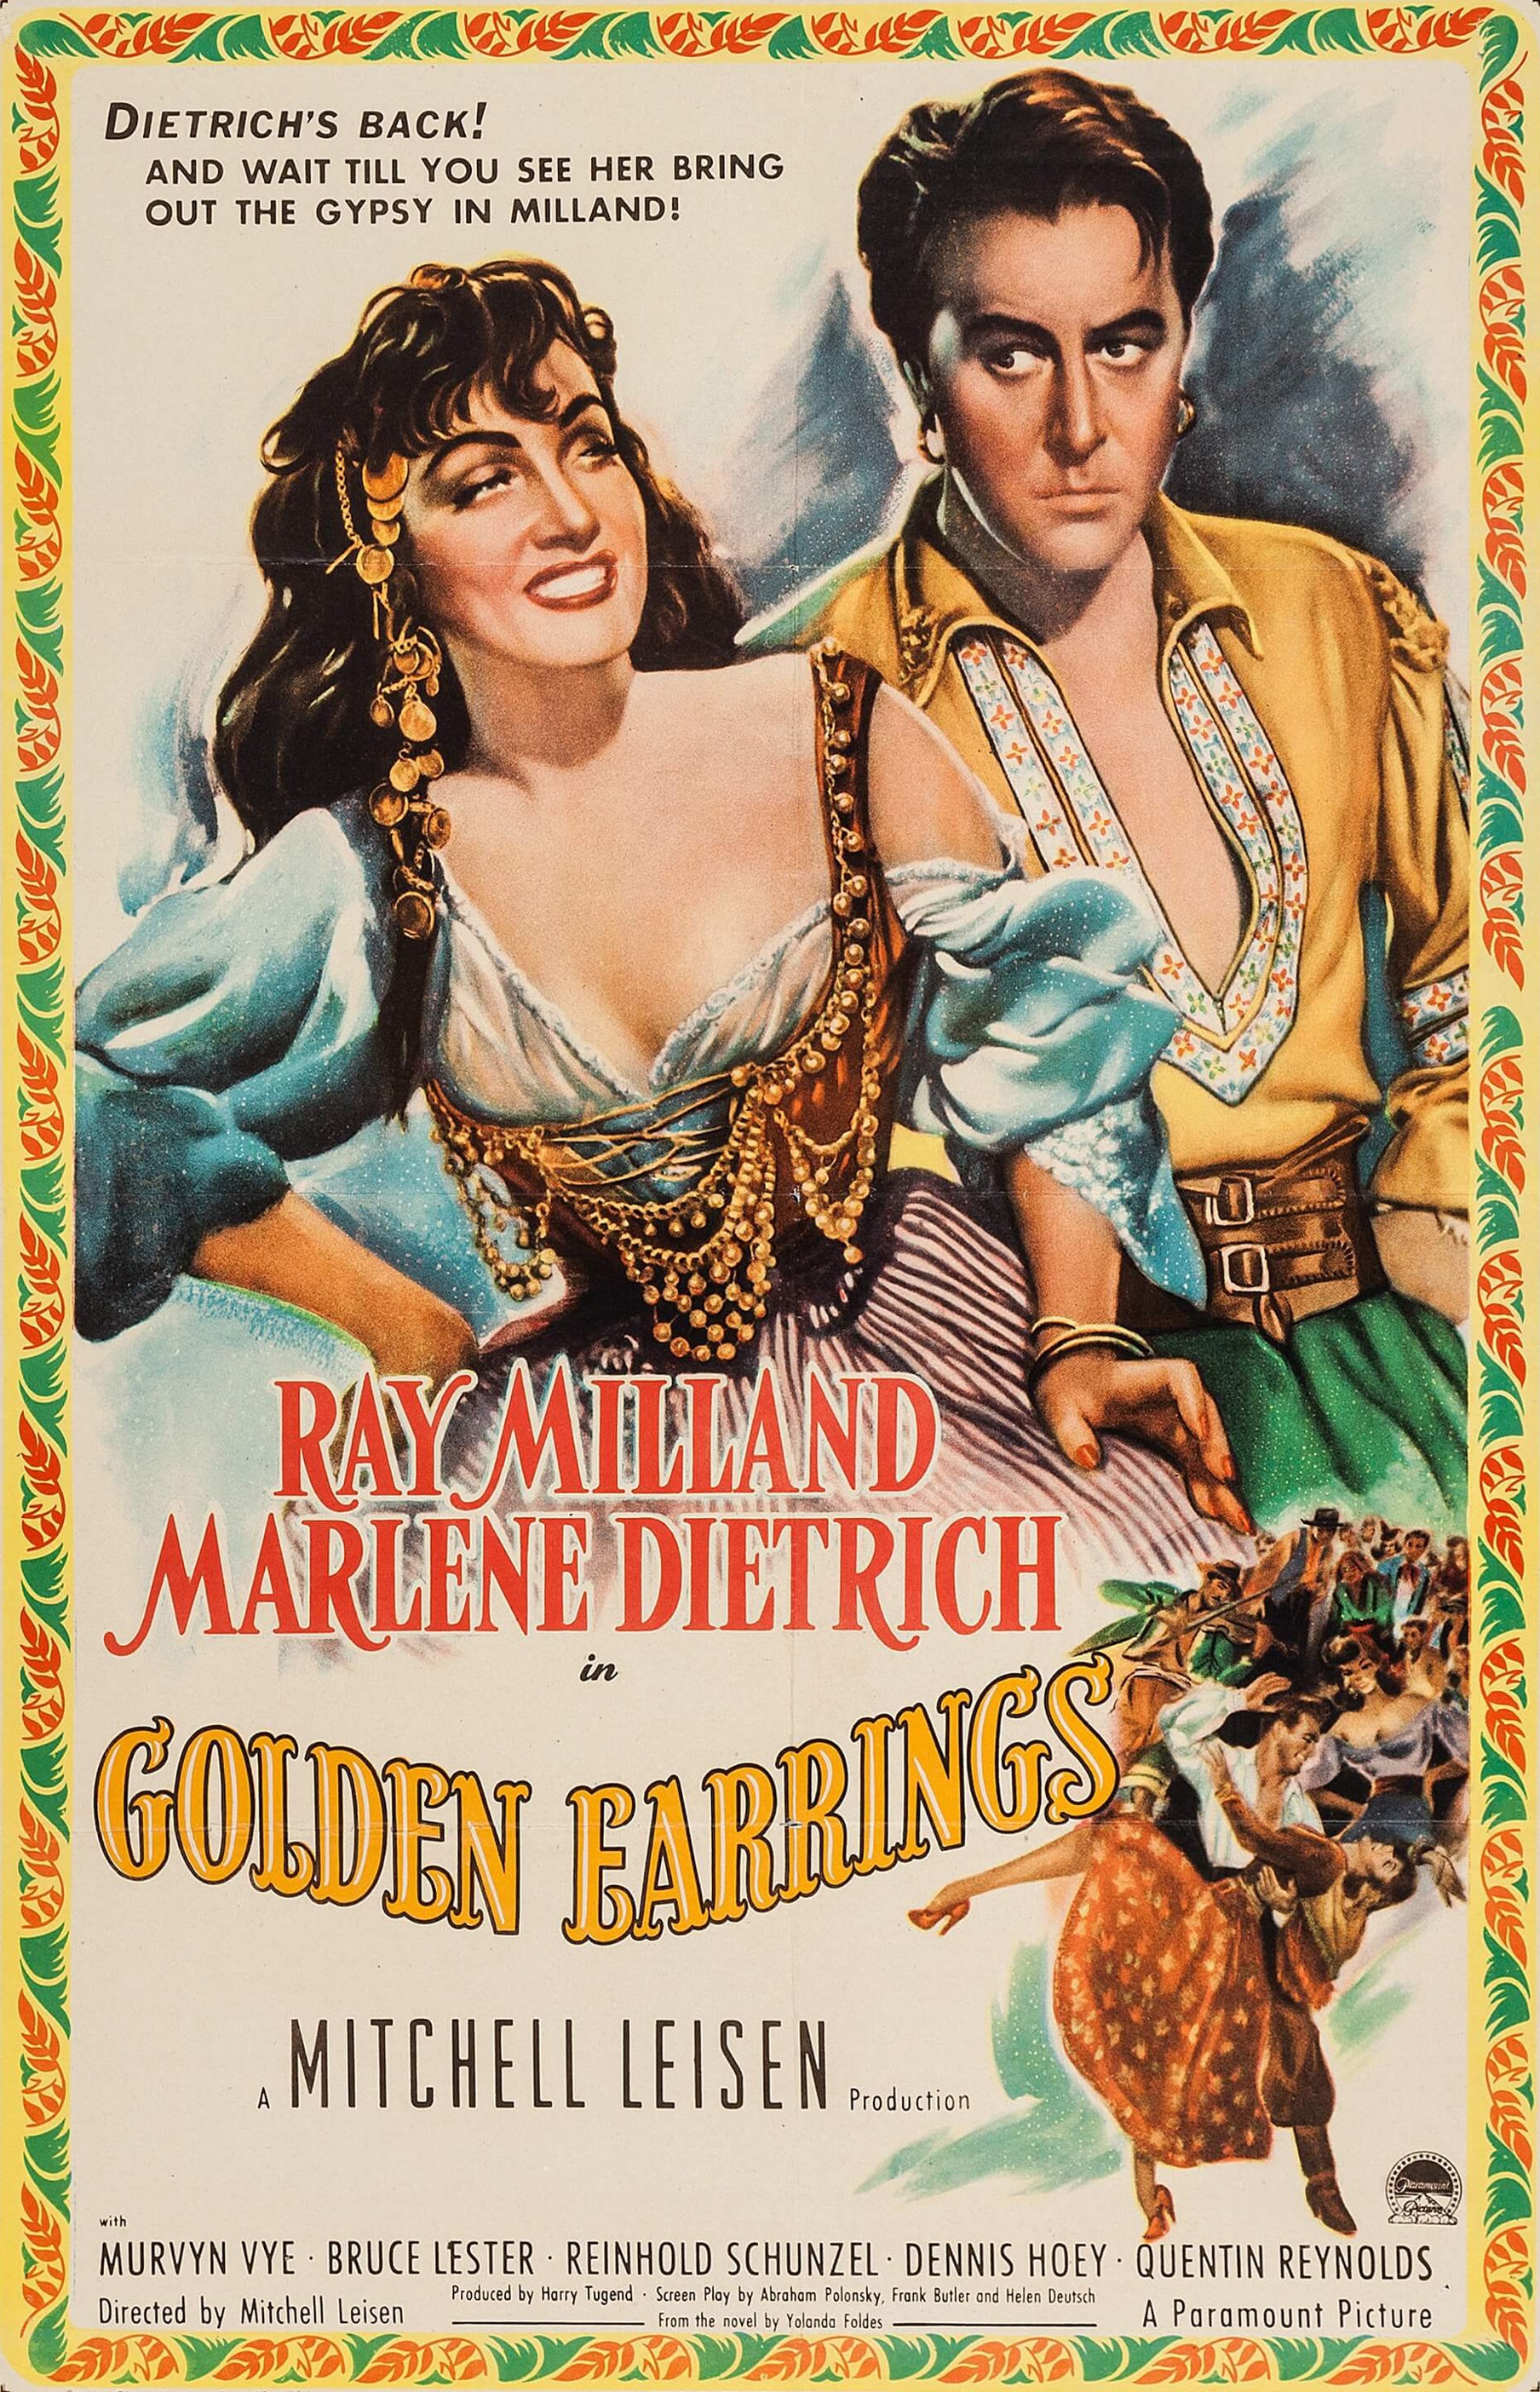 GOLDEN EARRINGS (1947)